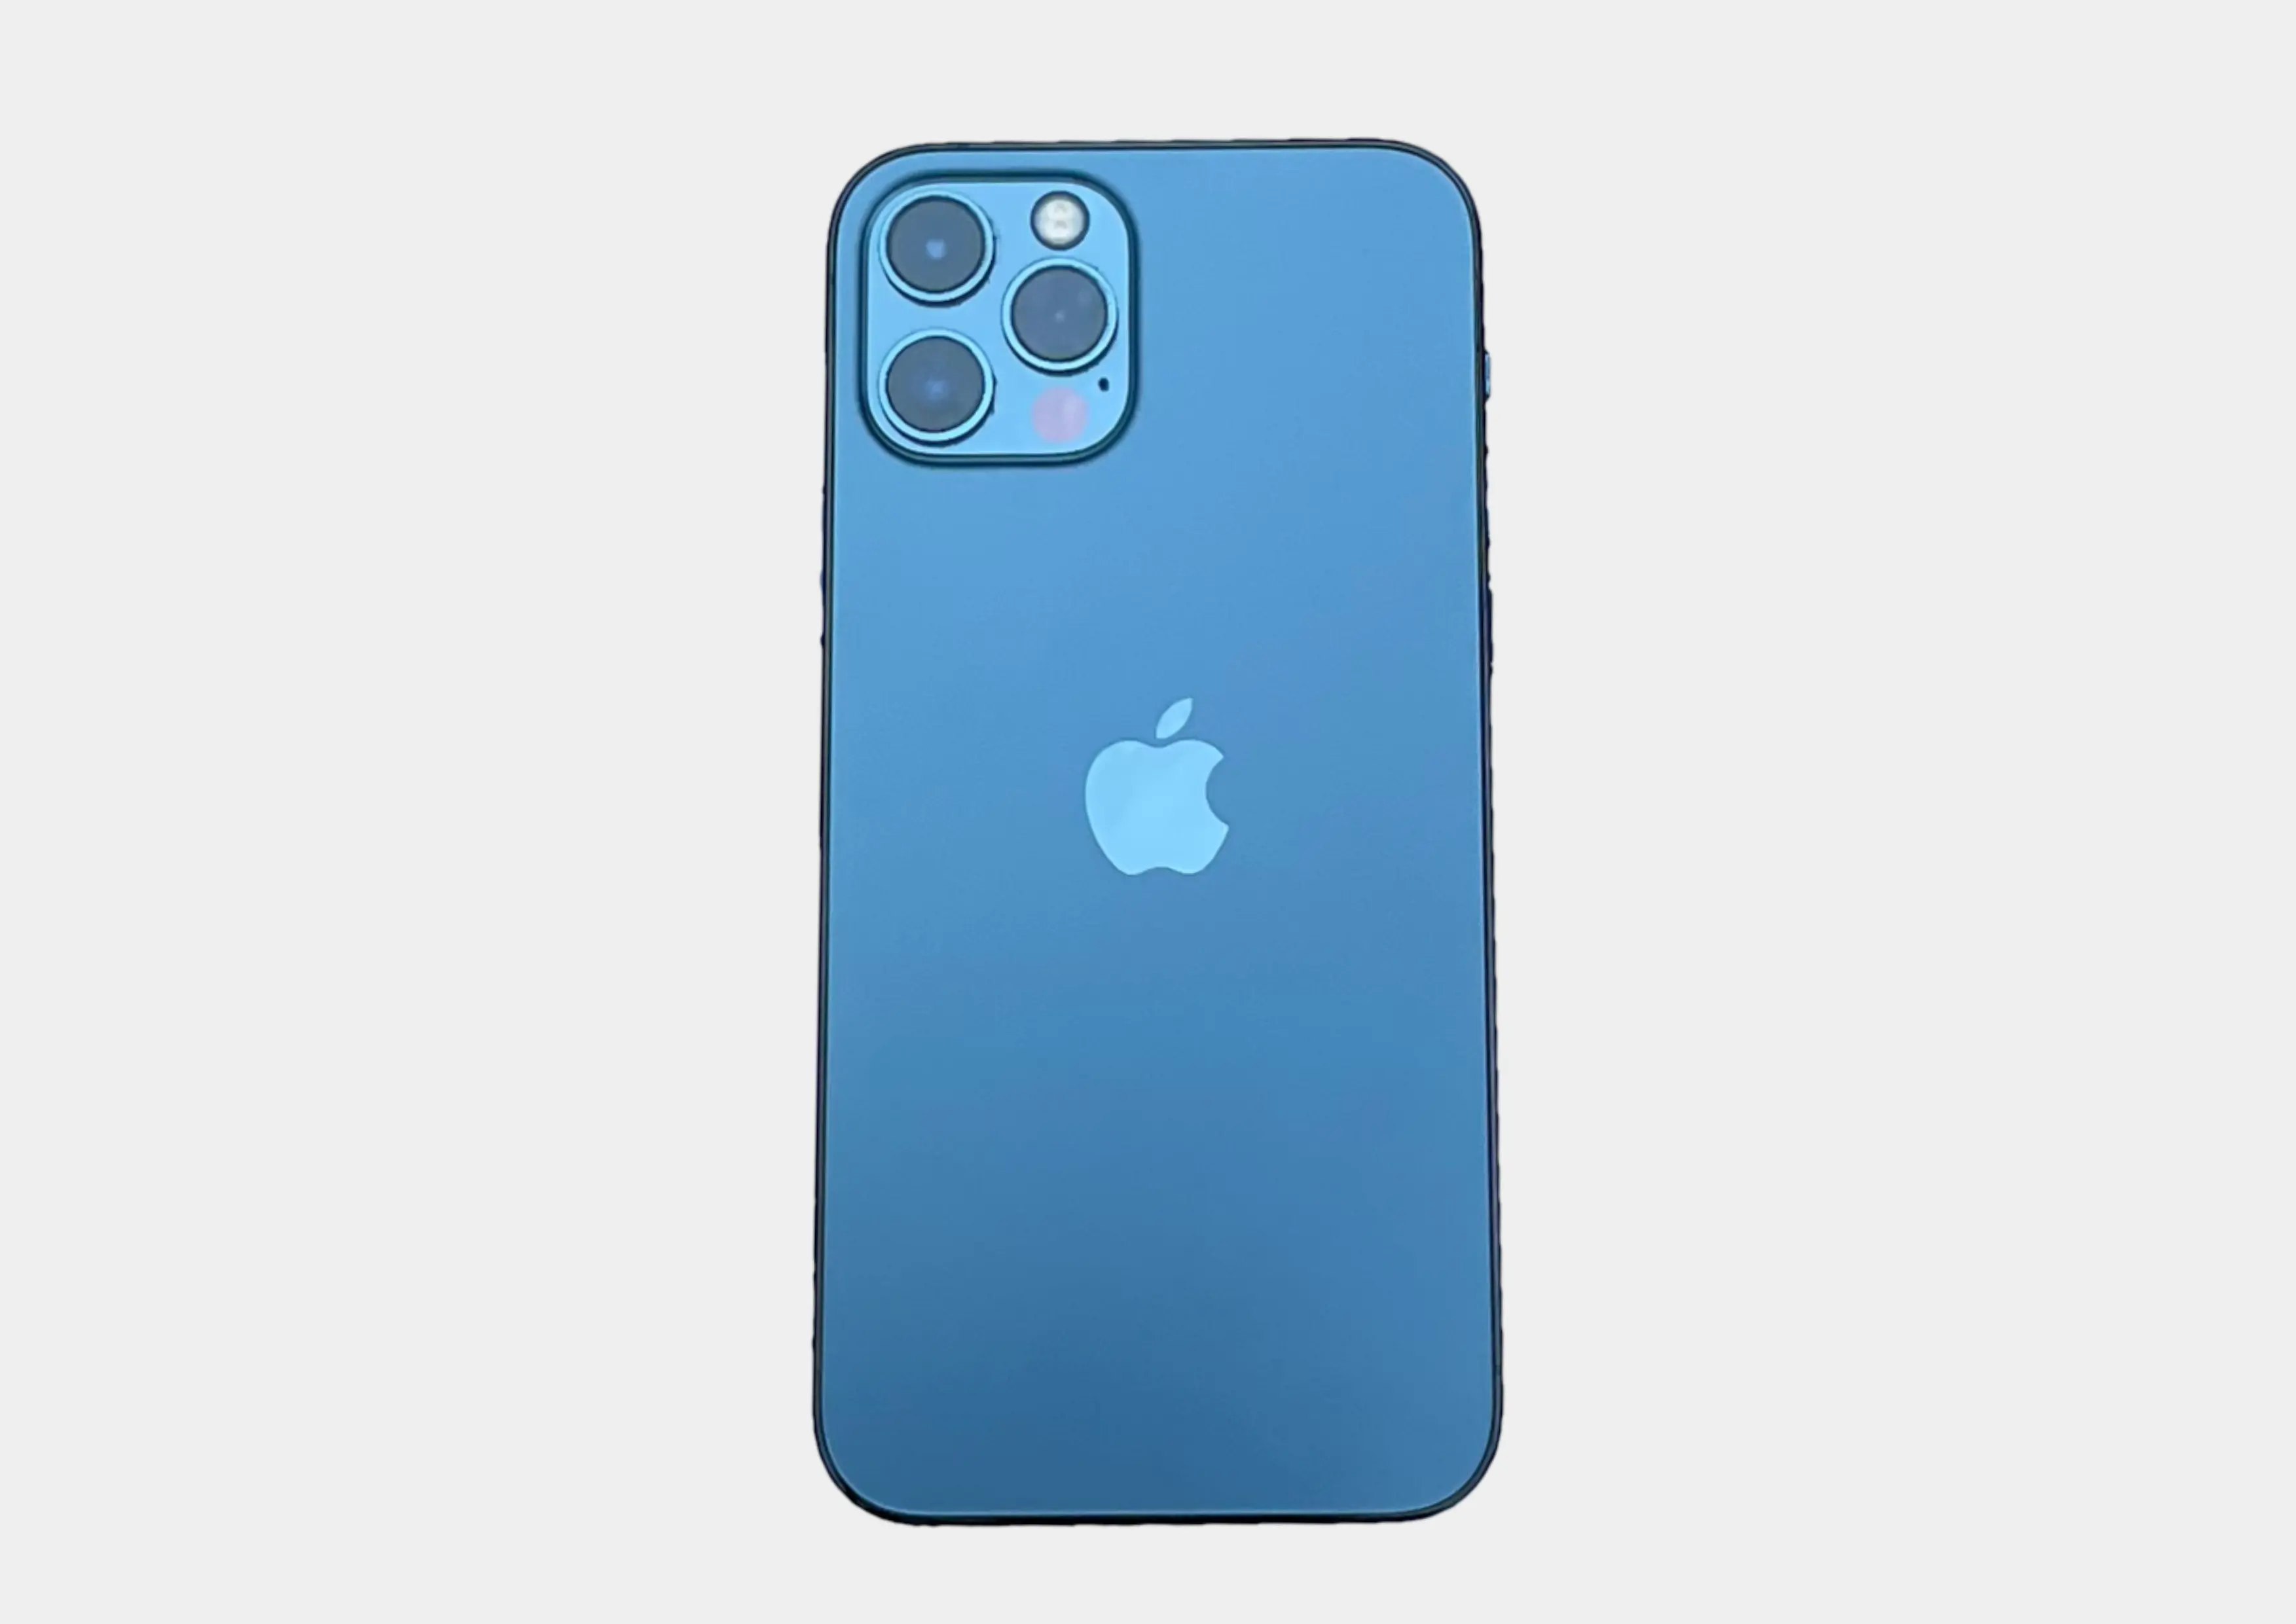 Apple iPhone 12 Pro, Pazifikblau